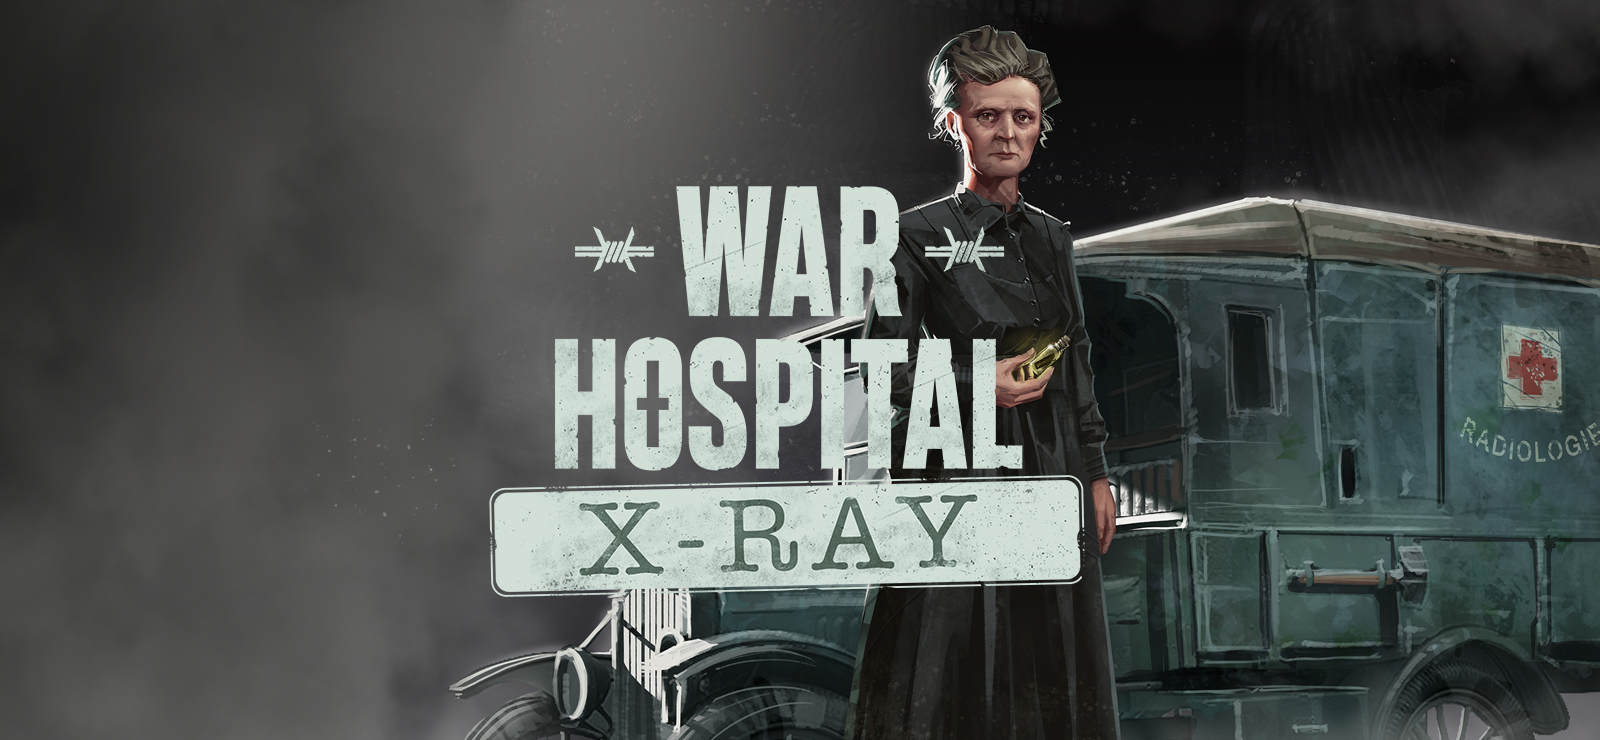 War Hospital – X-ray